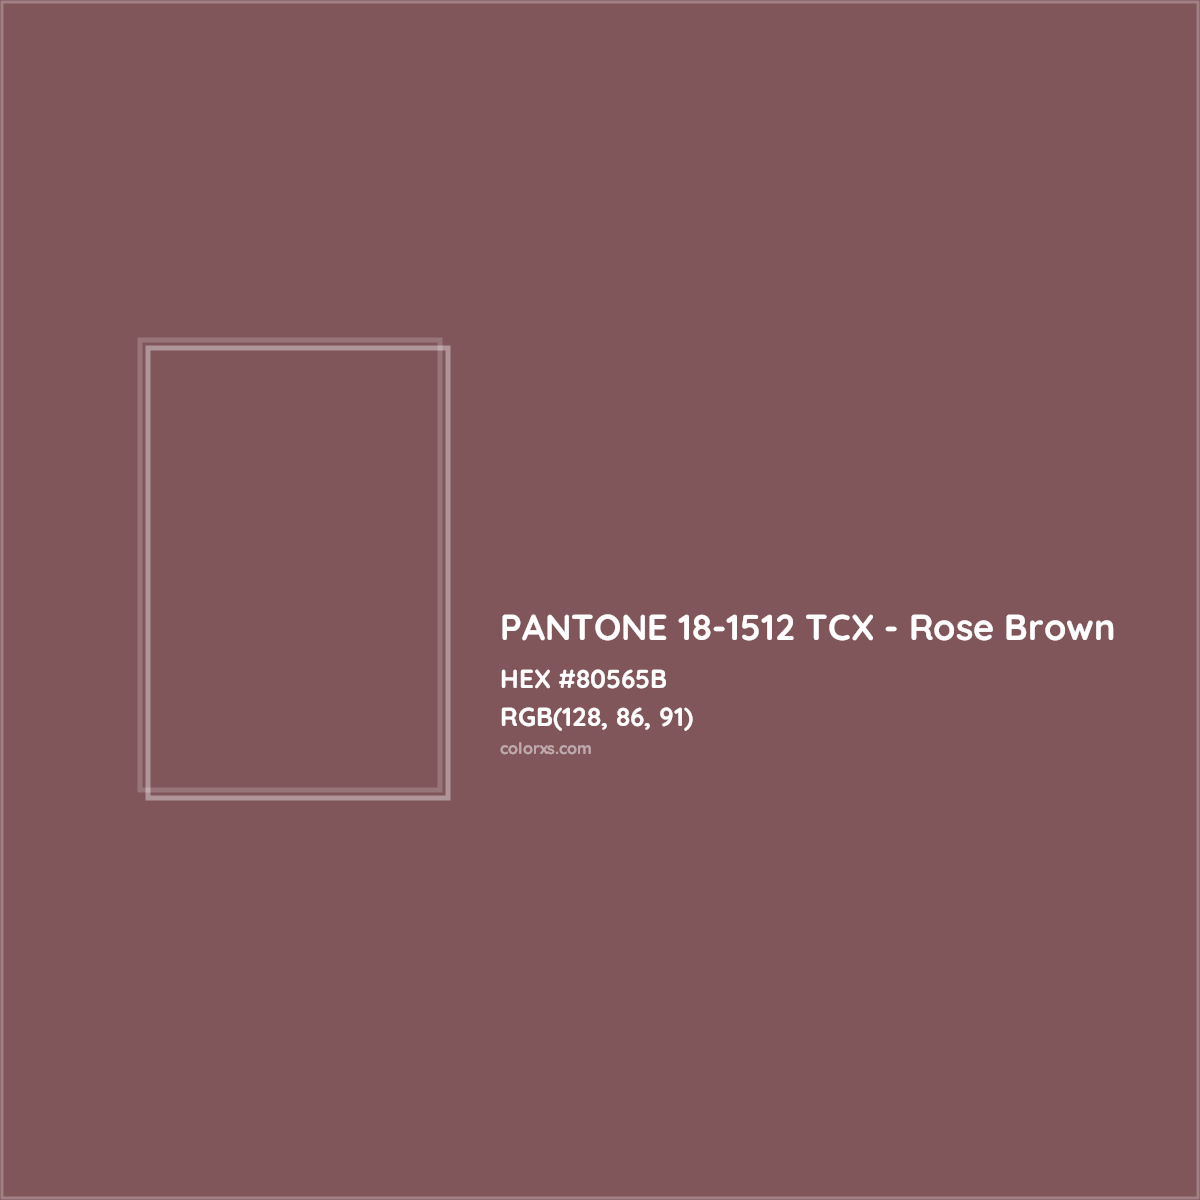 About PANTONE 18-1512 TCX - Rose Brown Color - Color codes, similar ...